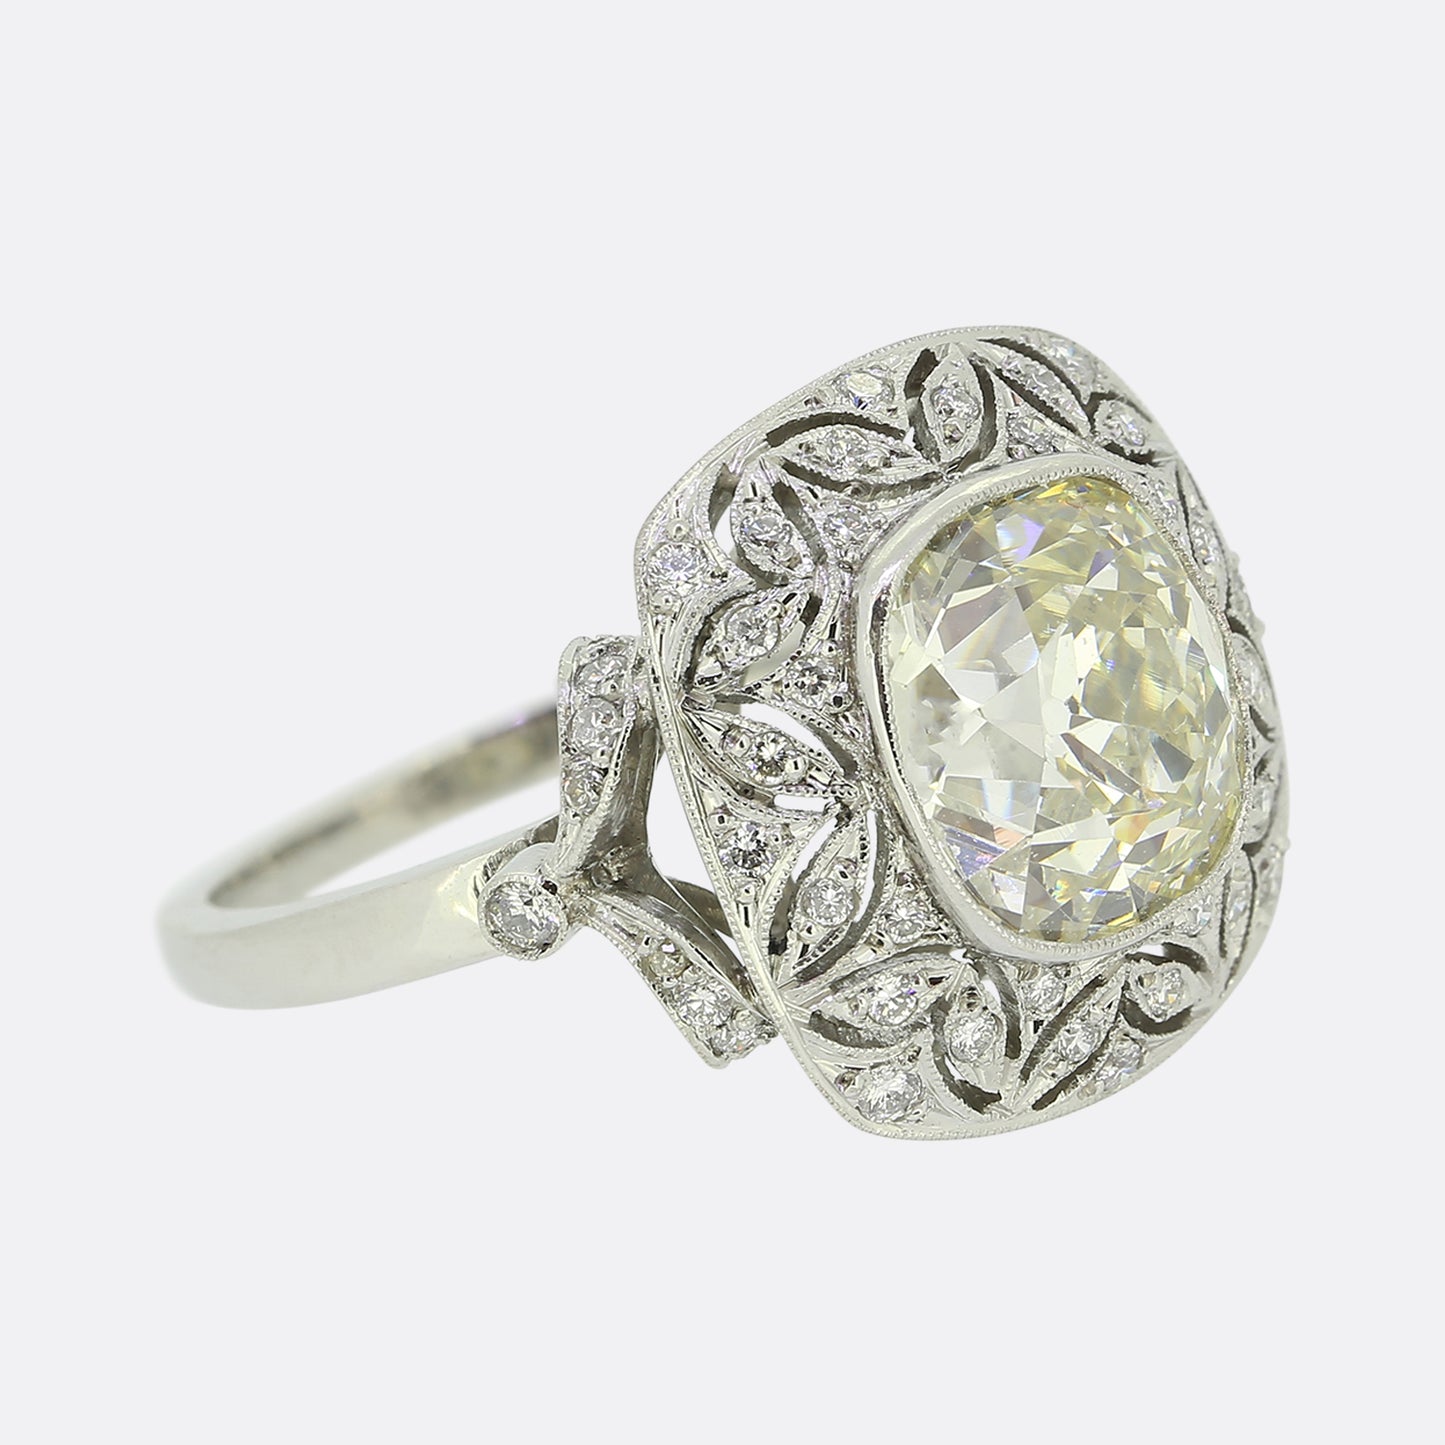 Vintage 3.12 Carat Diamond Cluster Ring